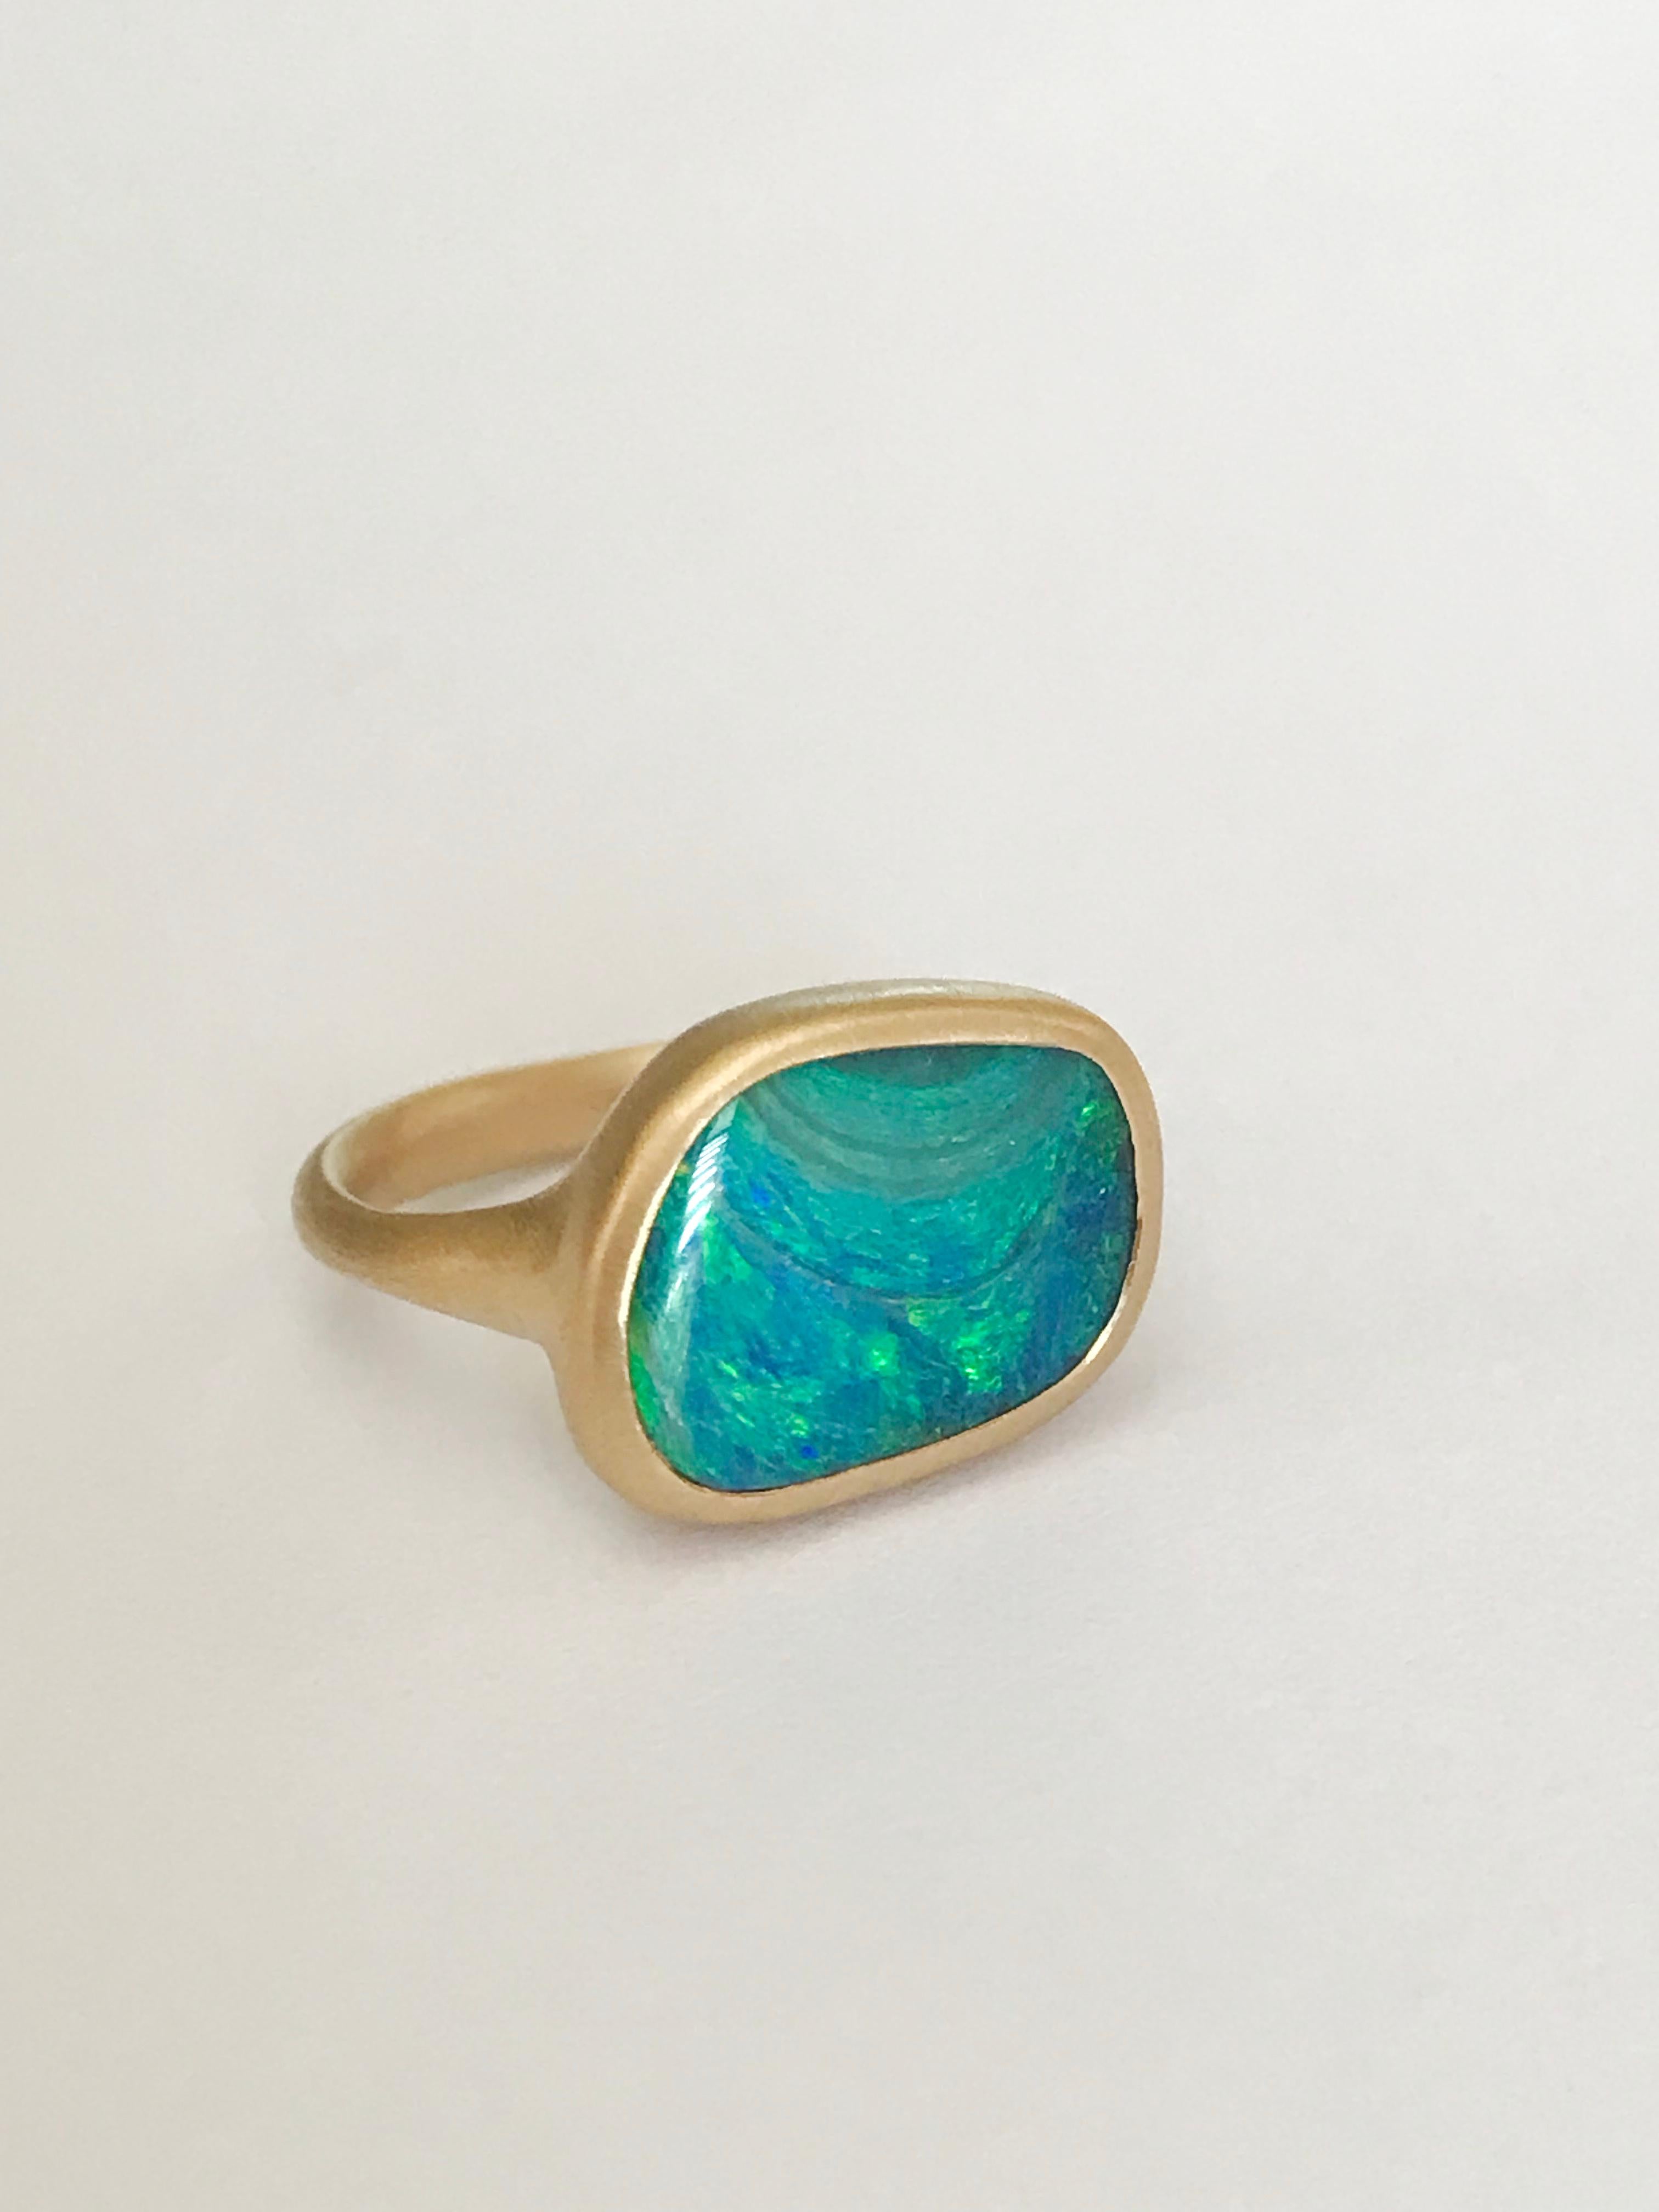 Mixed Cut Dalben Blue Green Boulder Opal Yellow Gold Ring For Sale